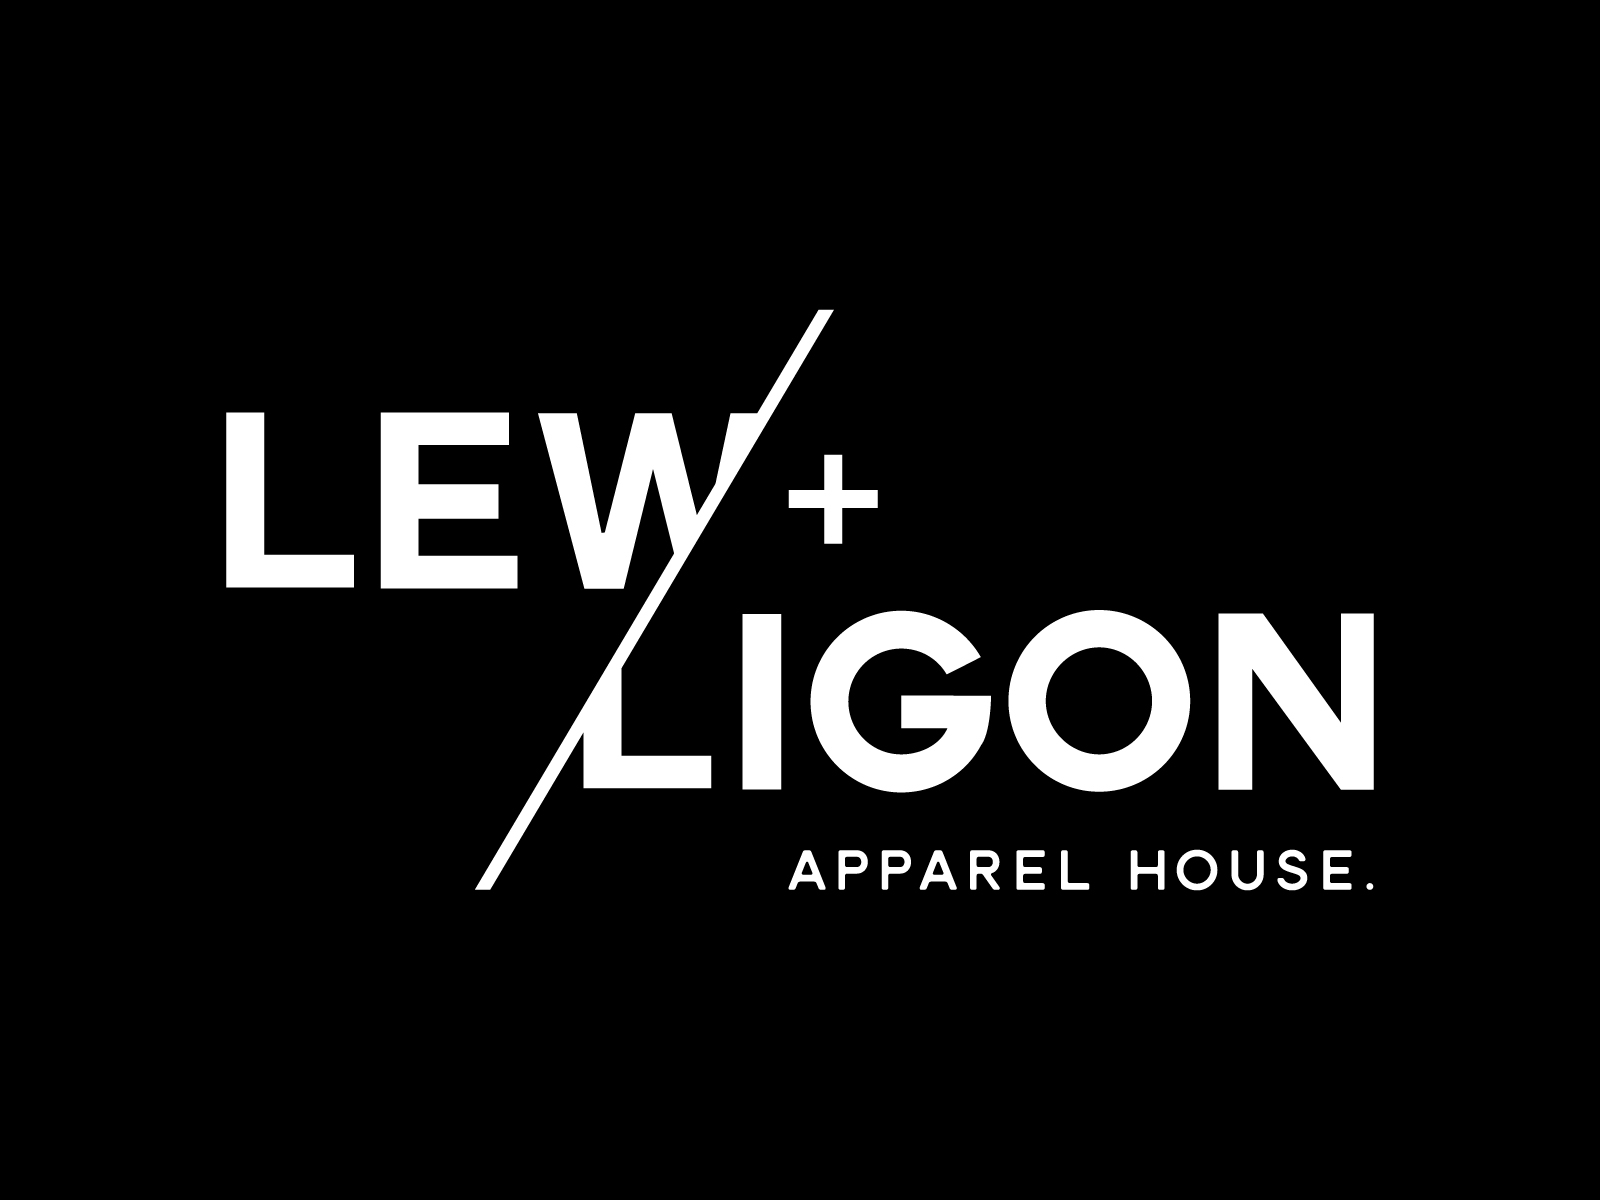 Lew + Ligon Brand Identity by Durrell Burris on Dribbble